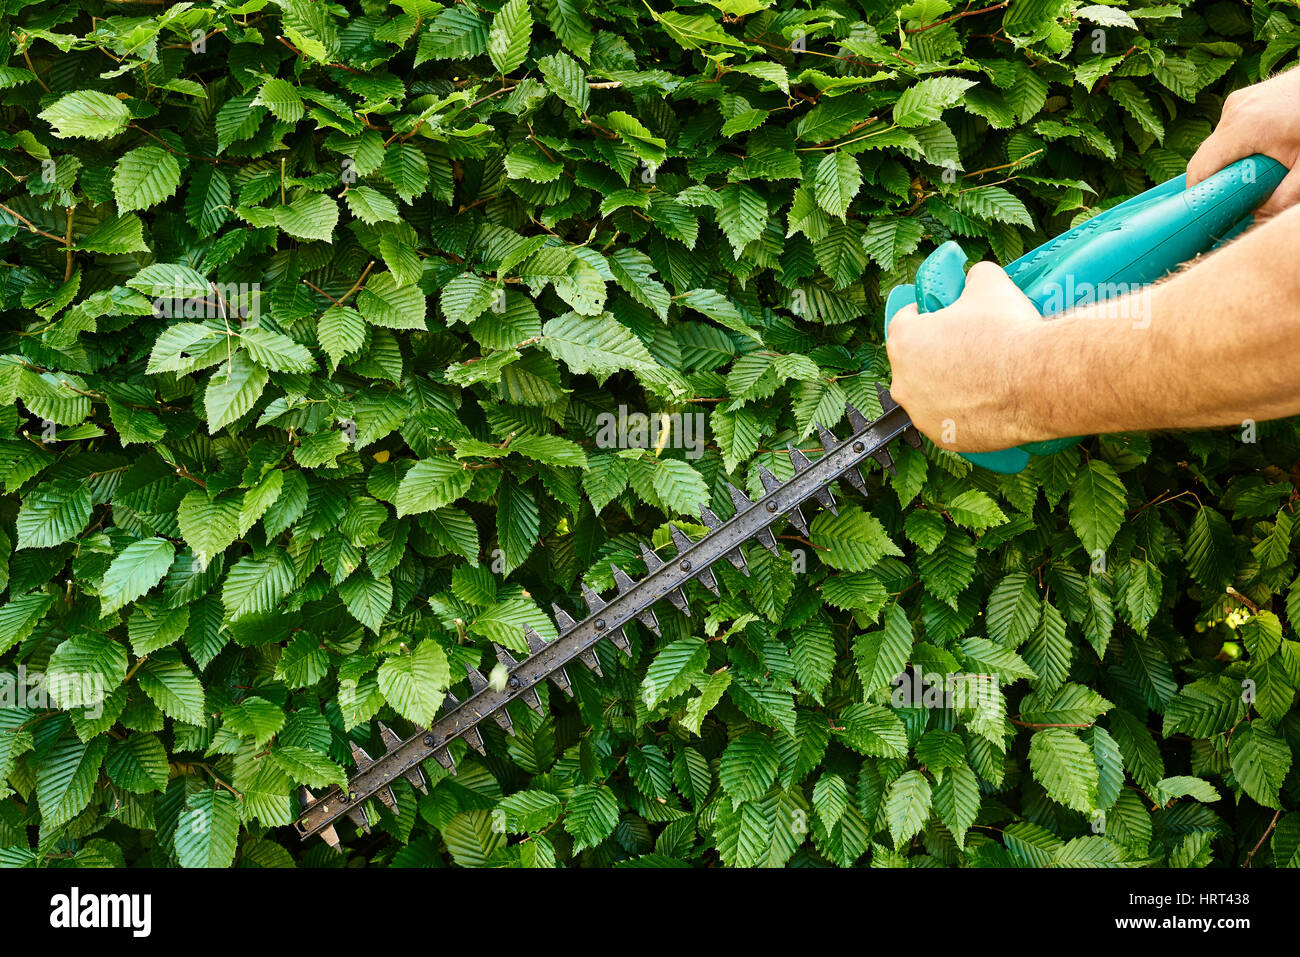 Cutting a hedge, gardening Stock Photo